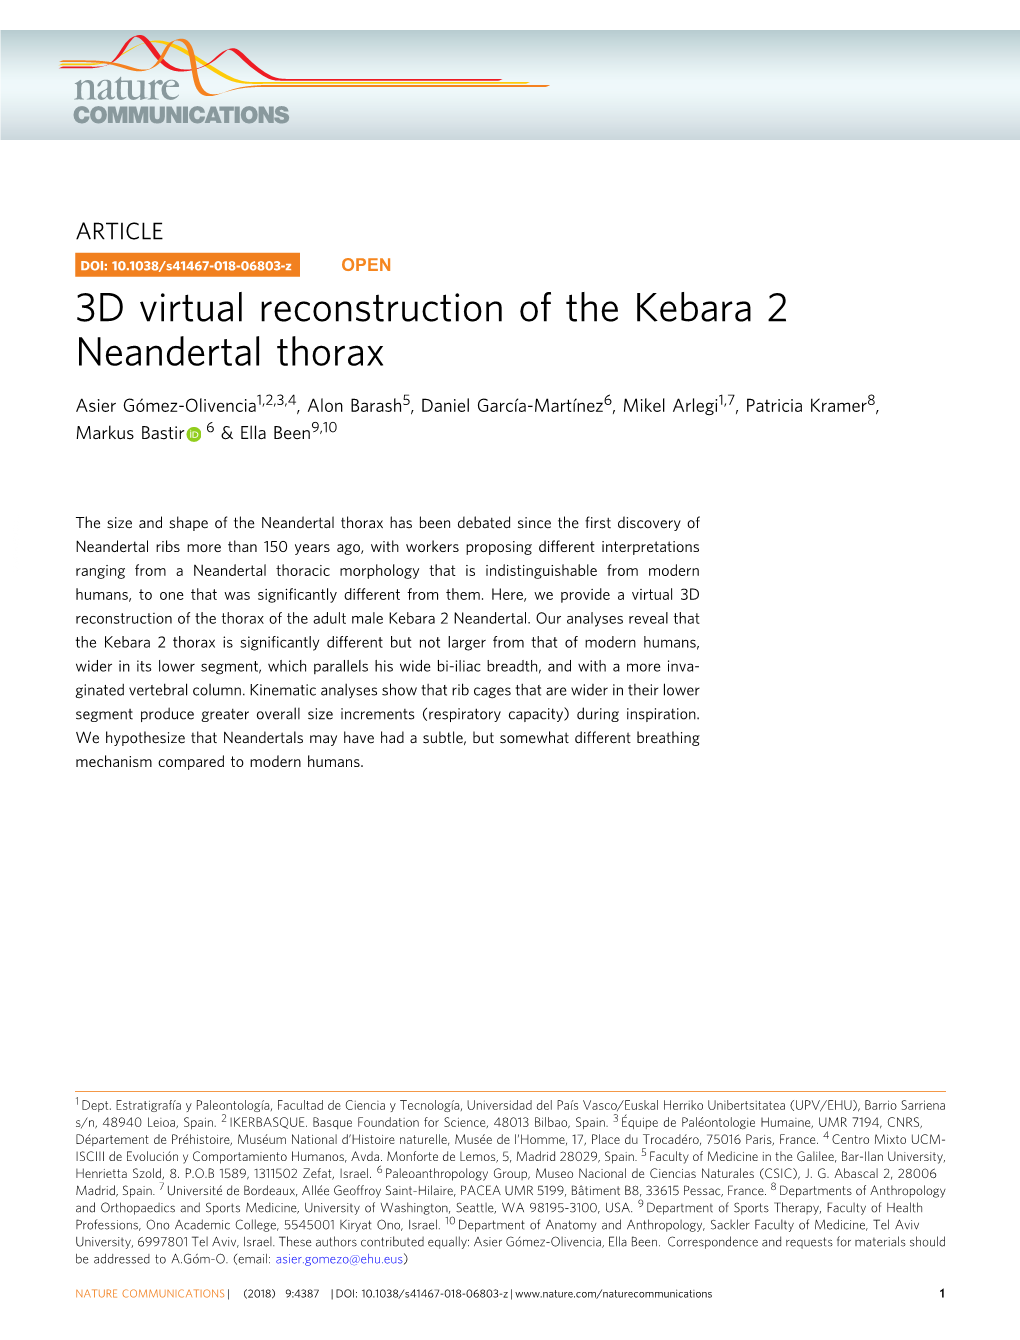 3D Virtual Reconstruction of the Kebara 2 Neandertal Thorax